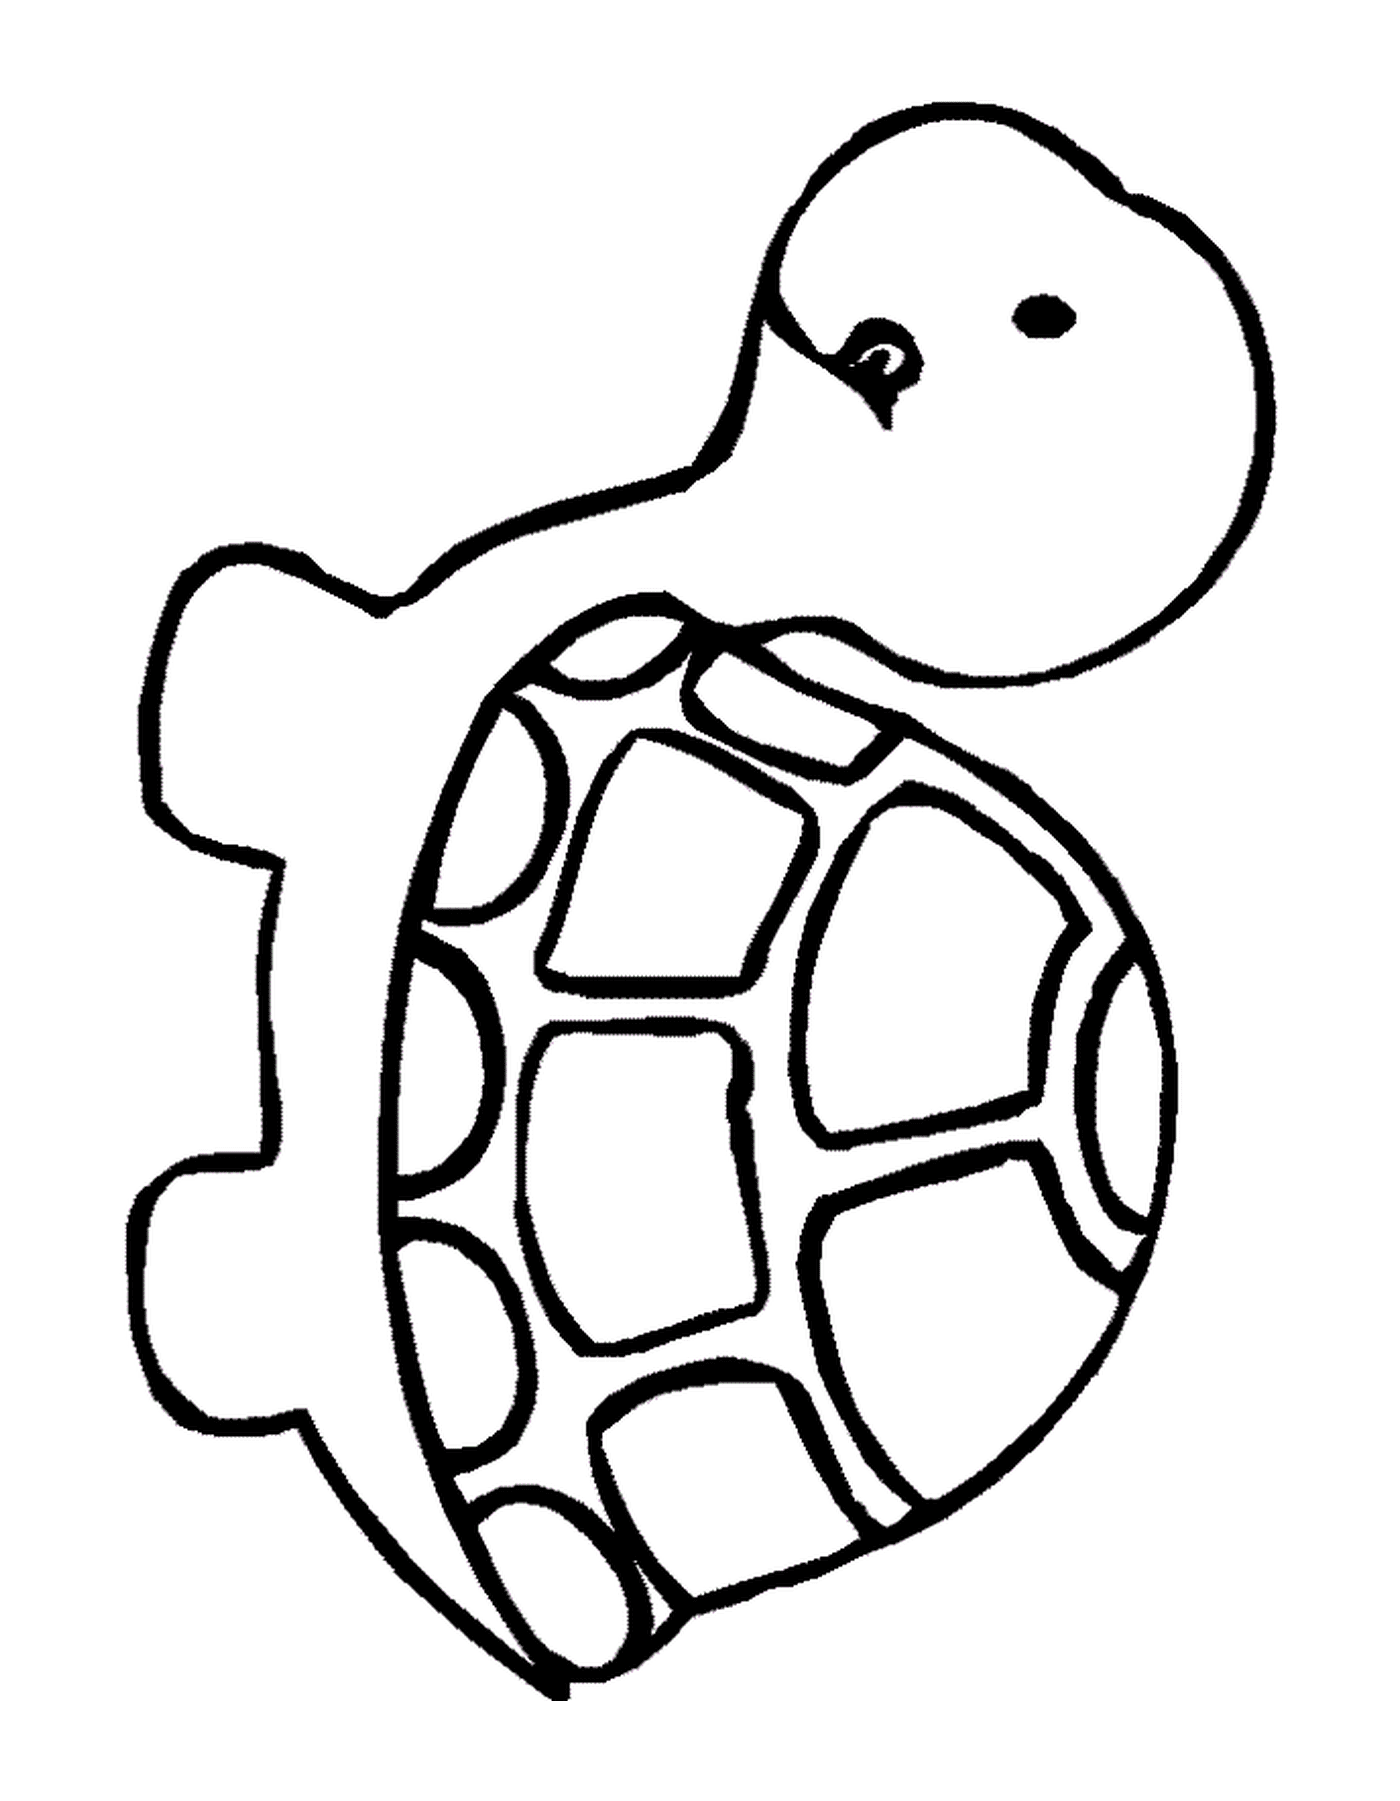  Uma tartaruga 